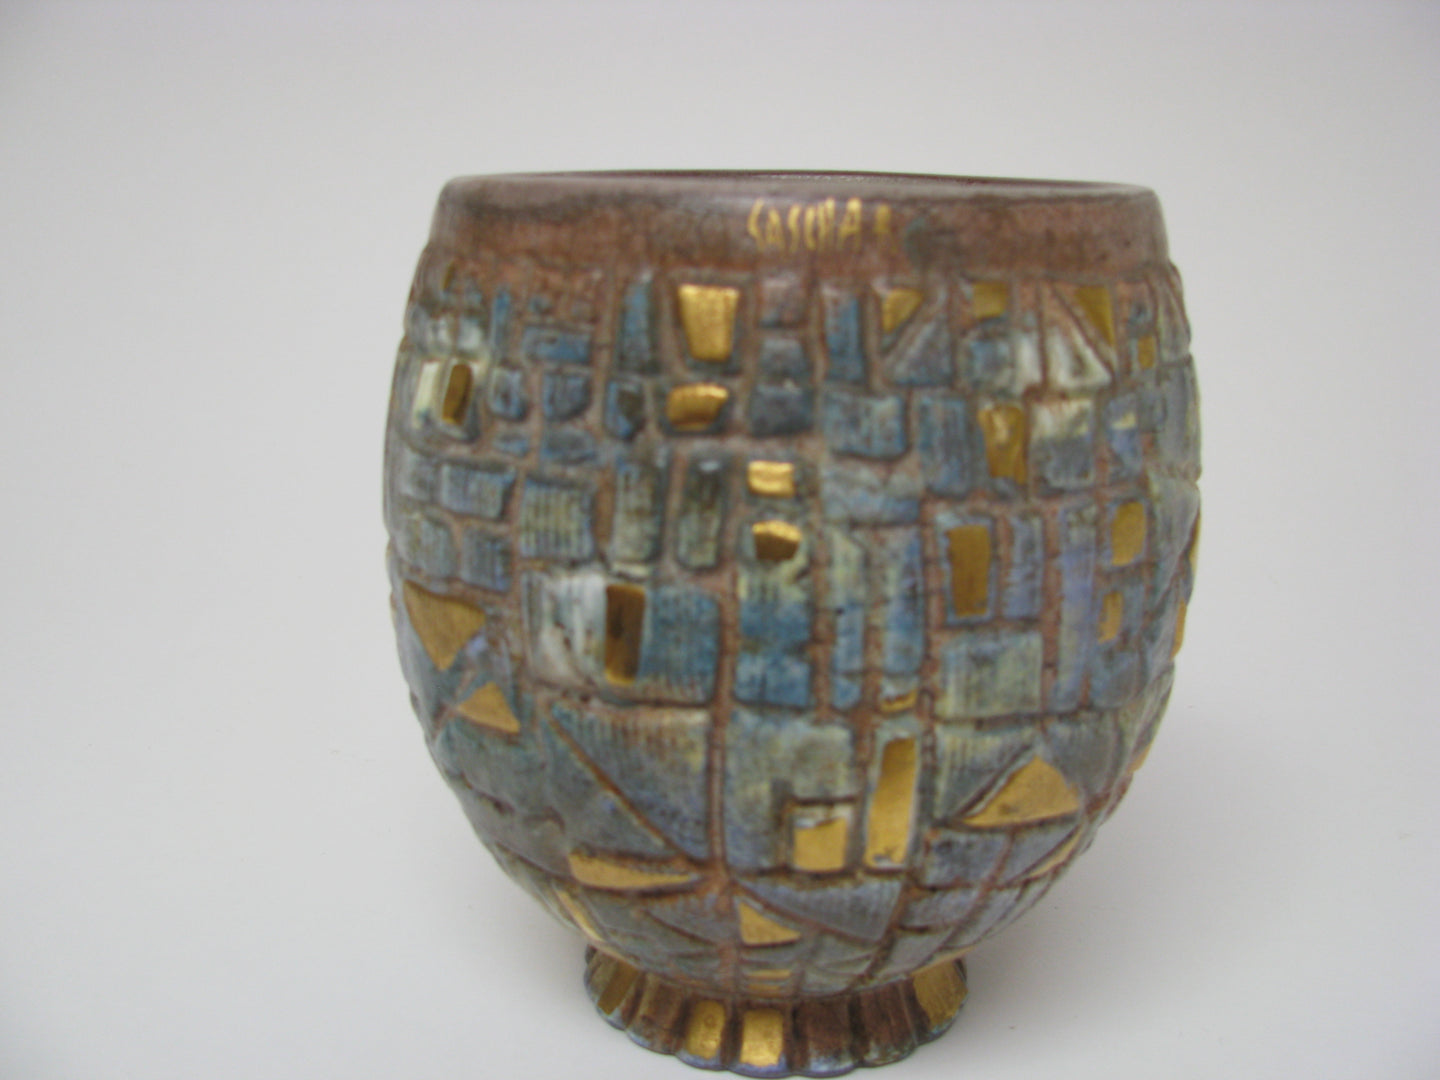 Sascha Brastoff Mosaic Ceramic Egg Shaped Planter Bowl